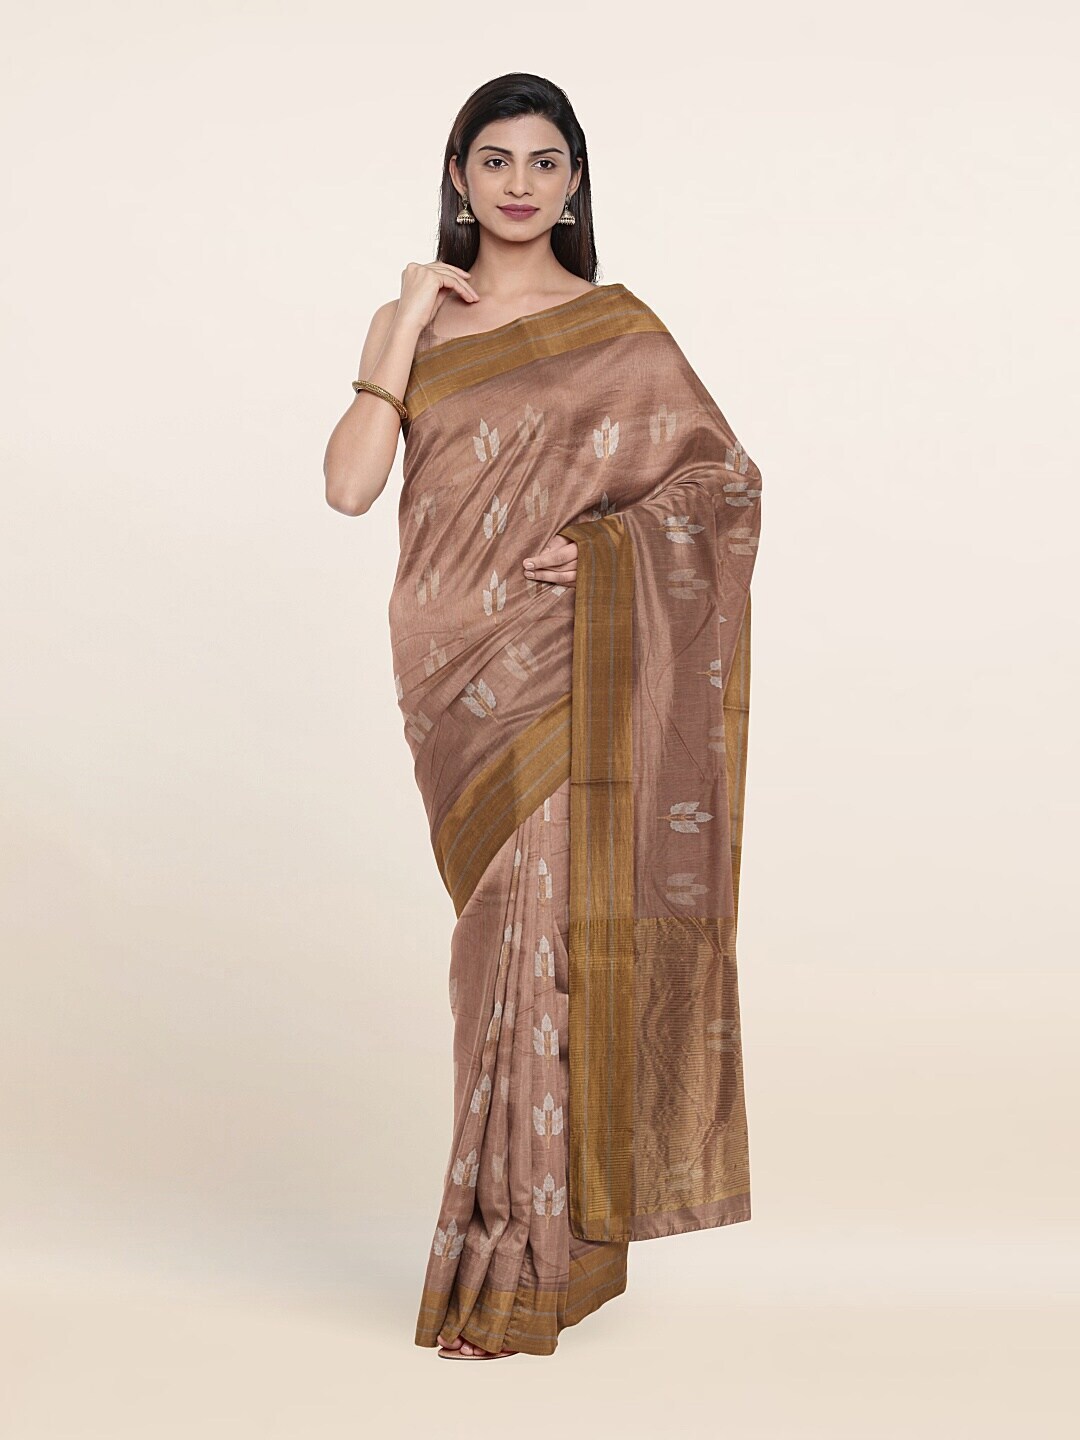 Pothys Mauve & Gold-Toned Floral Zari Silk Cotton Saree Price in India